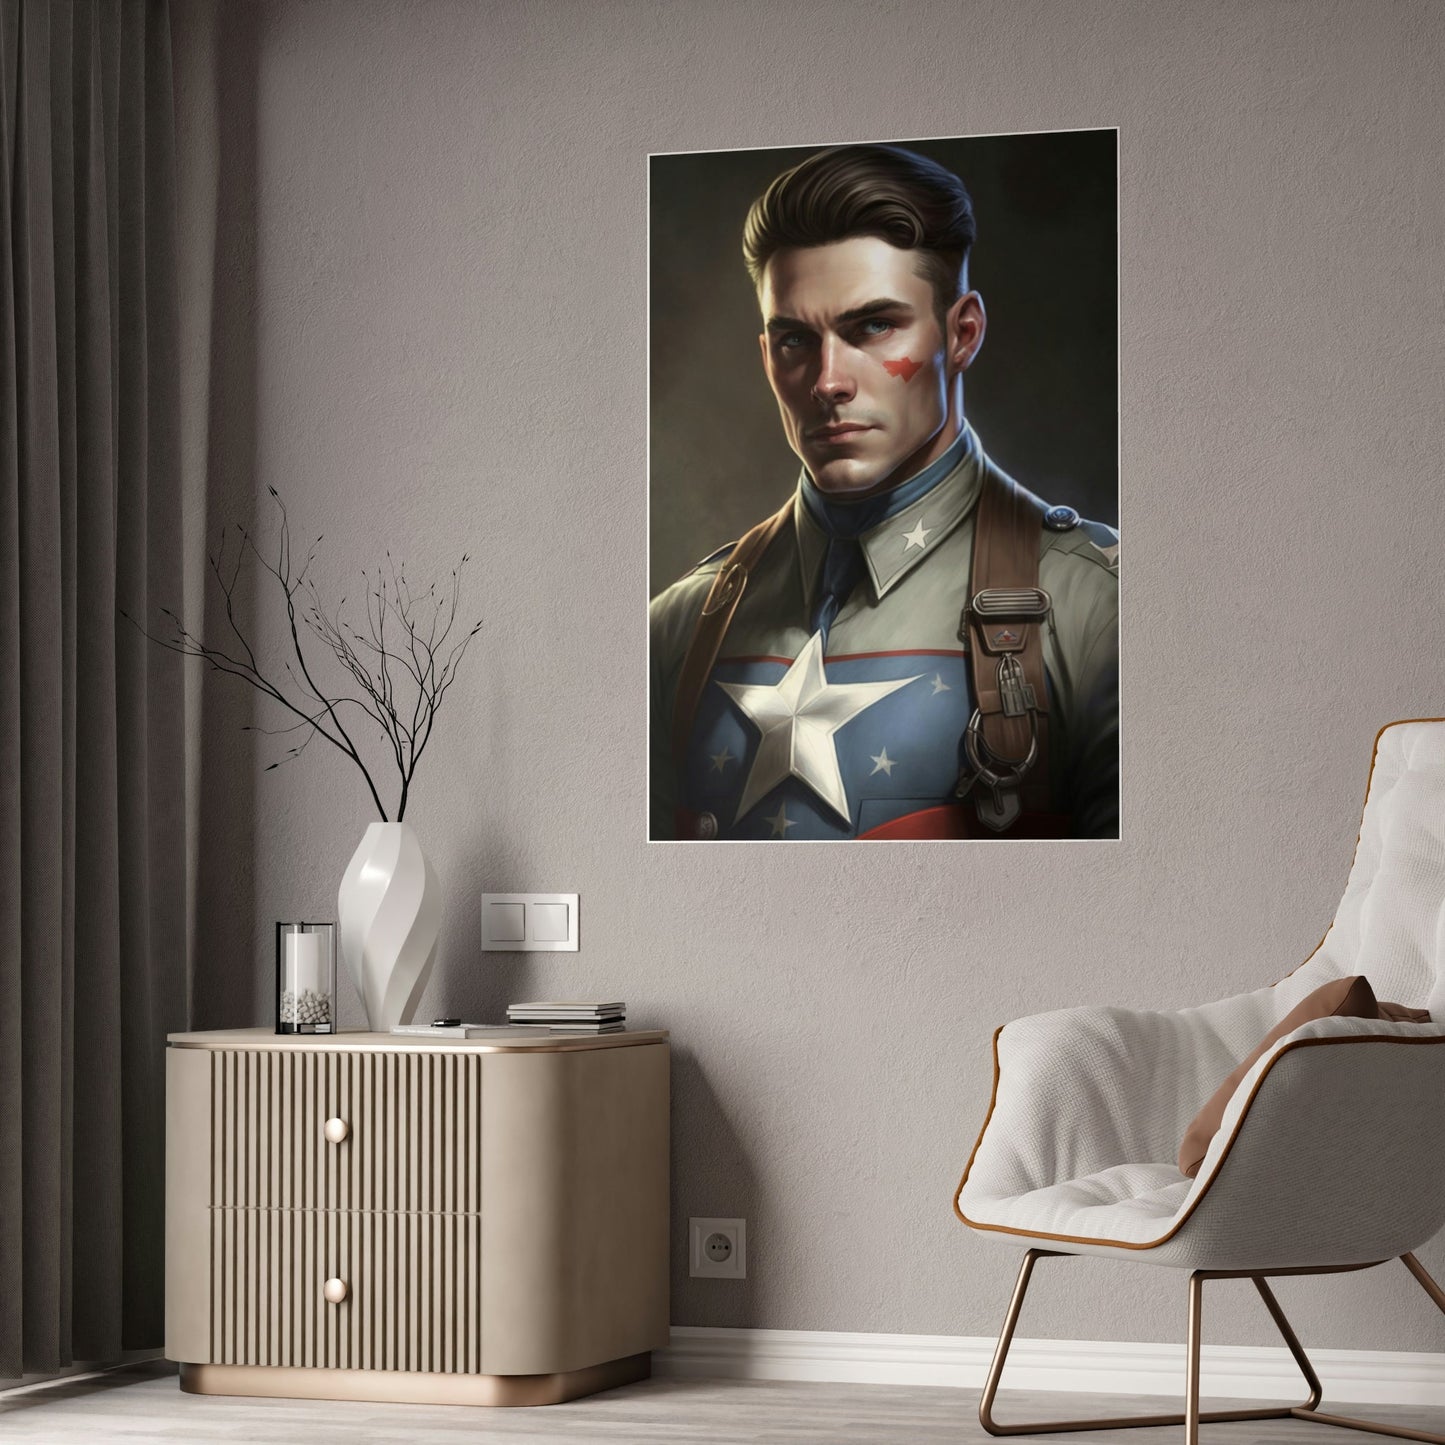 Marvelous Art: Captain America Print on Canvas and Wall Art Decor